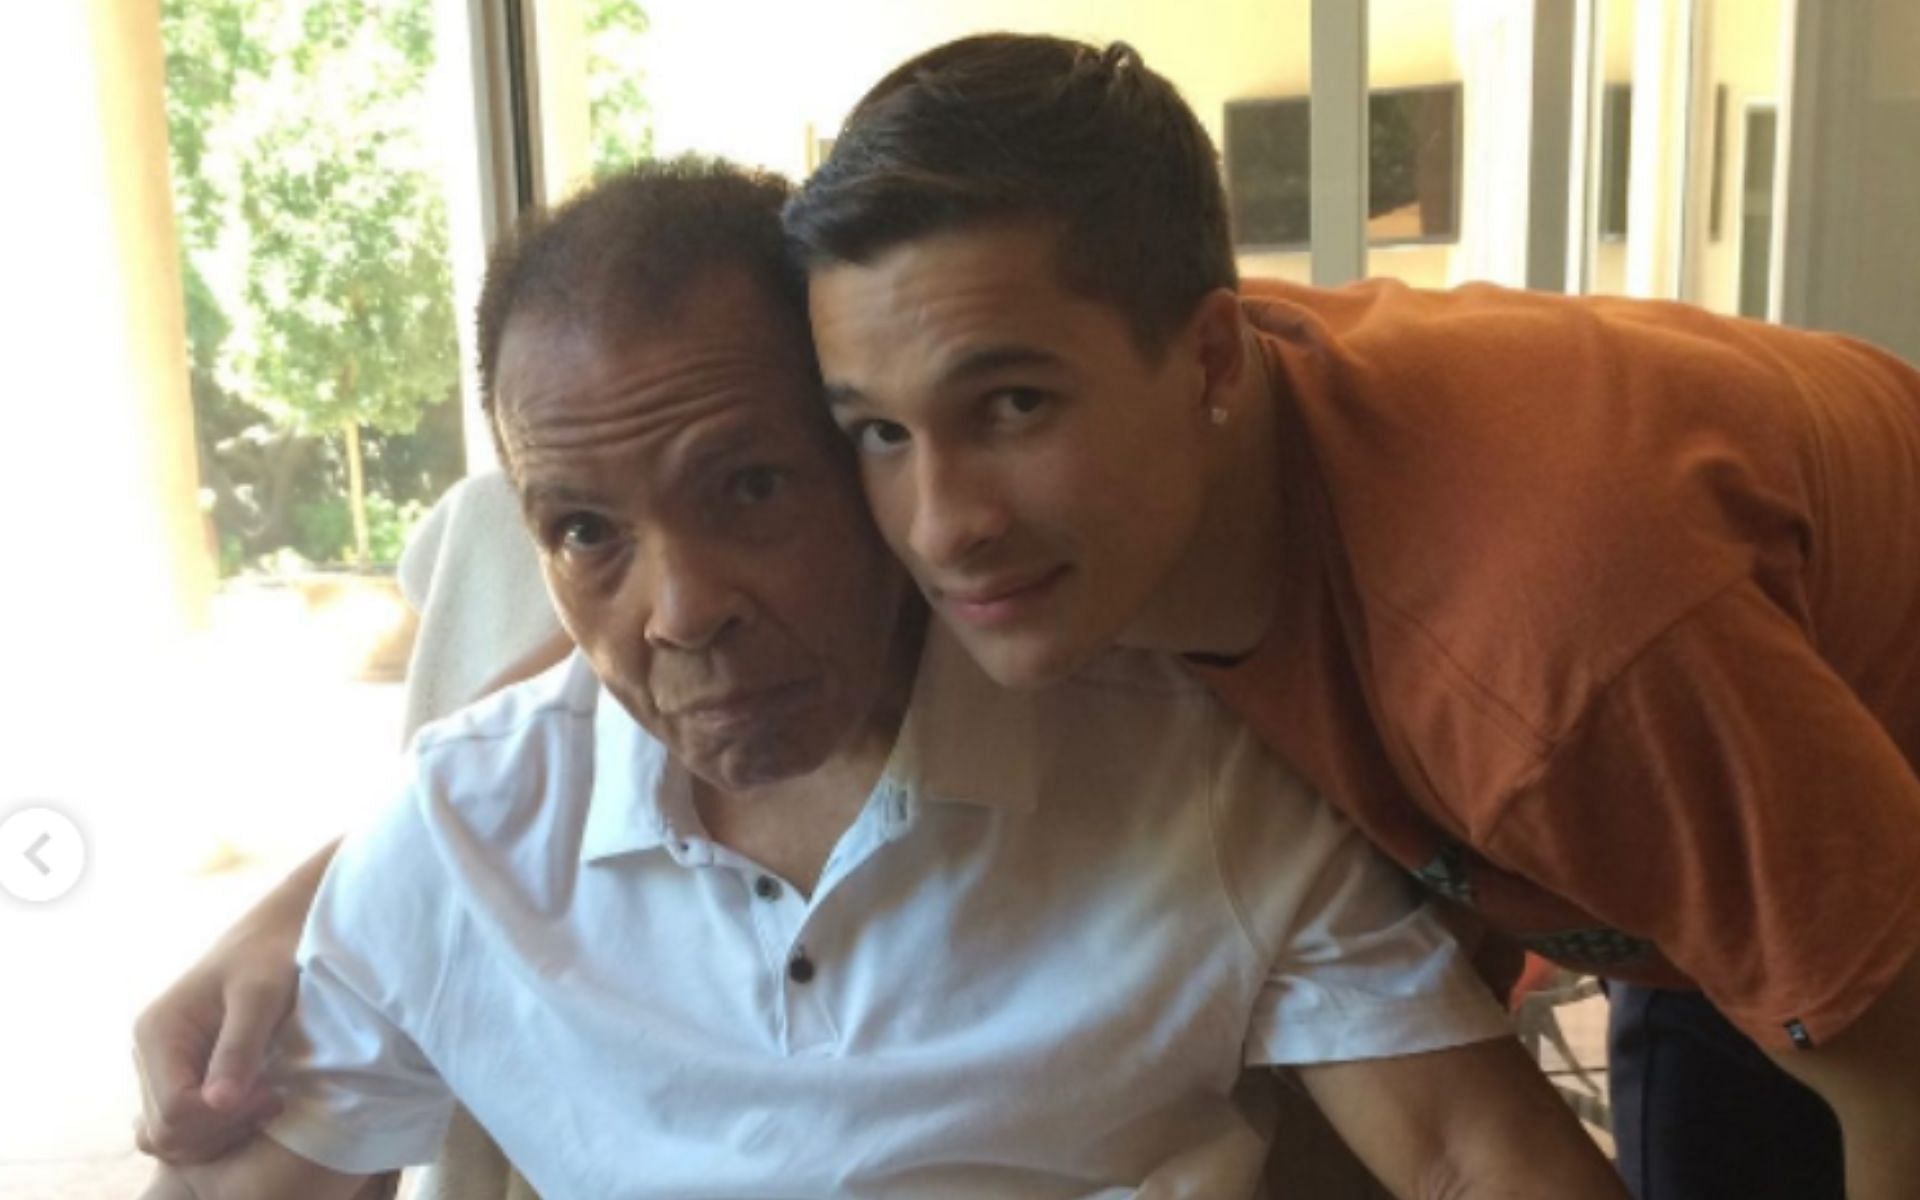 Muhammad Ali (left), Biaggio Ali Walsh (right) [Images courtesy of @biaggioaliwalsh on Instagram]